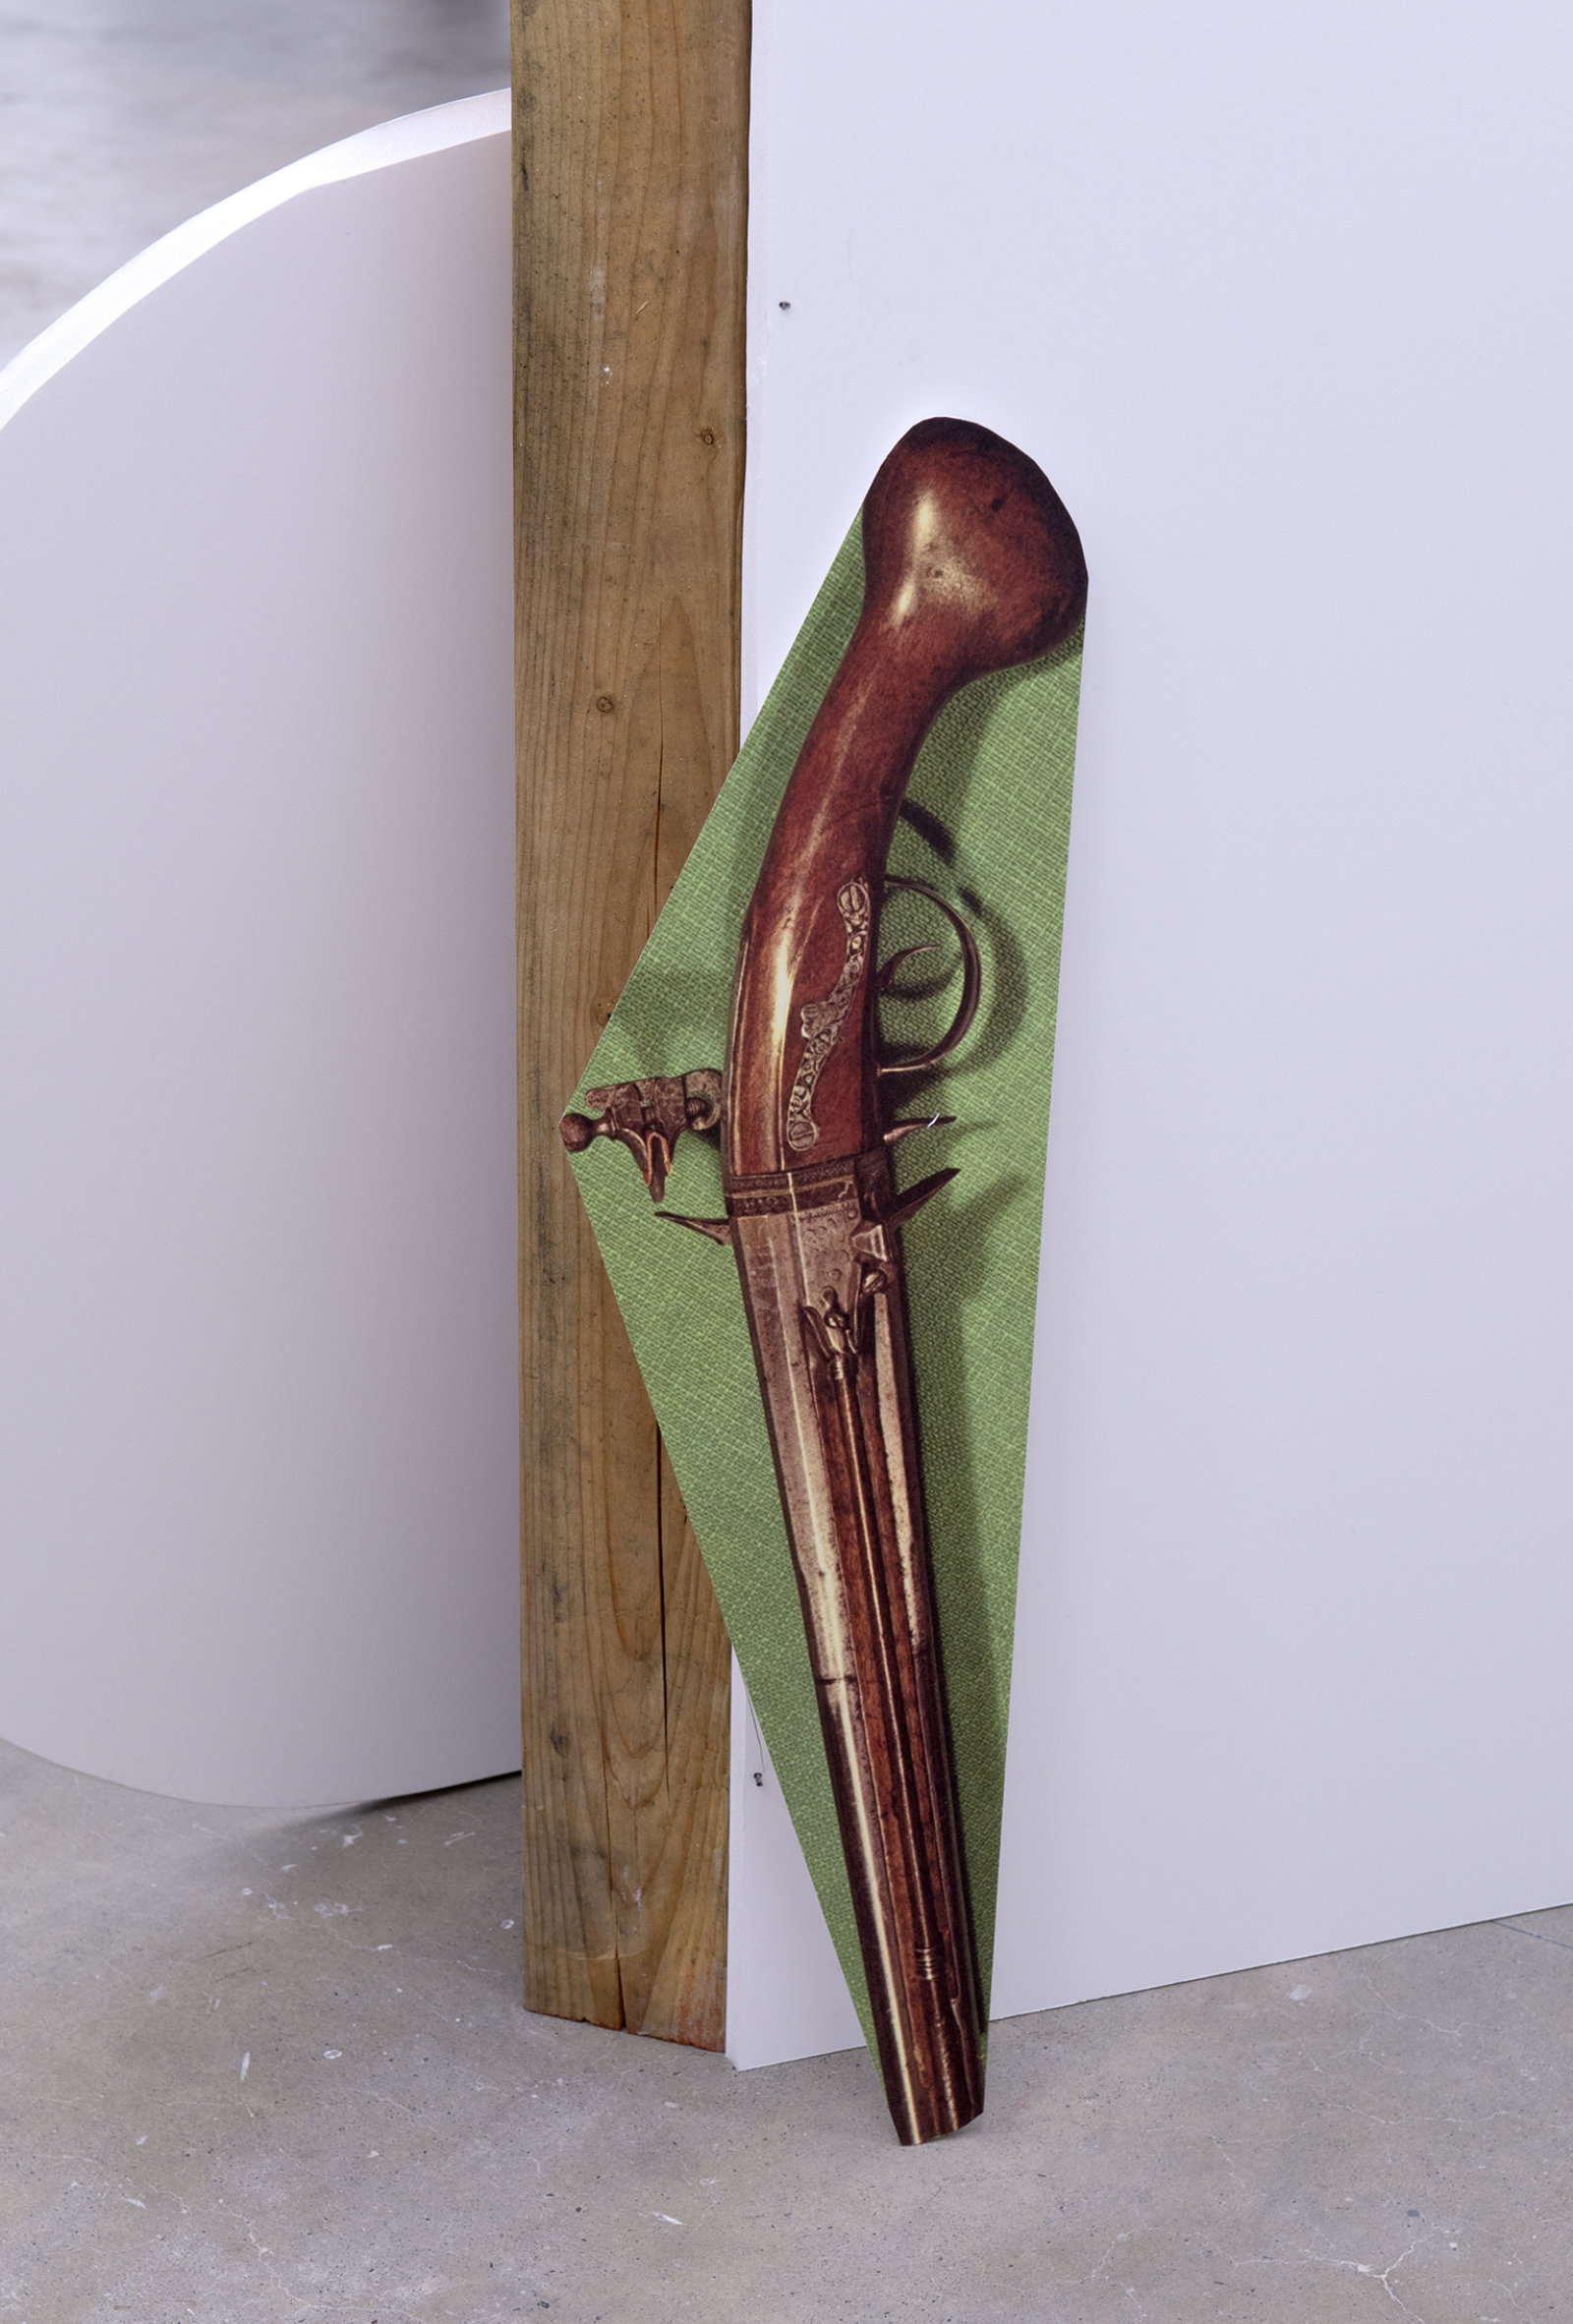 Geoffrey Farmer, Some kinds of sacrifice (detail), 2014, douglas fir pole, 6 photographs mounted on foamcore, 200 x 4 x 4 in. (508 x 9 x 9 cm)